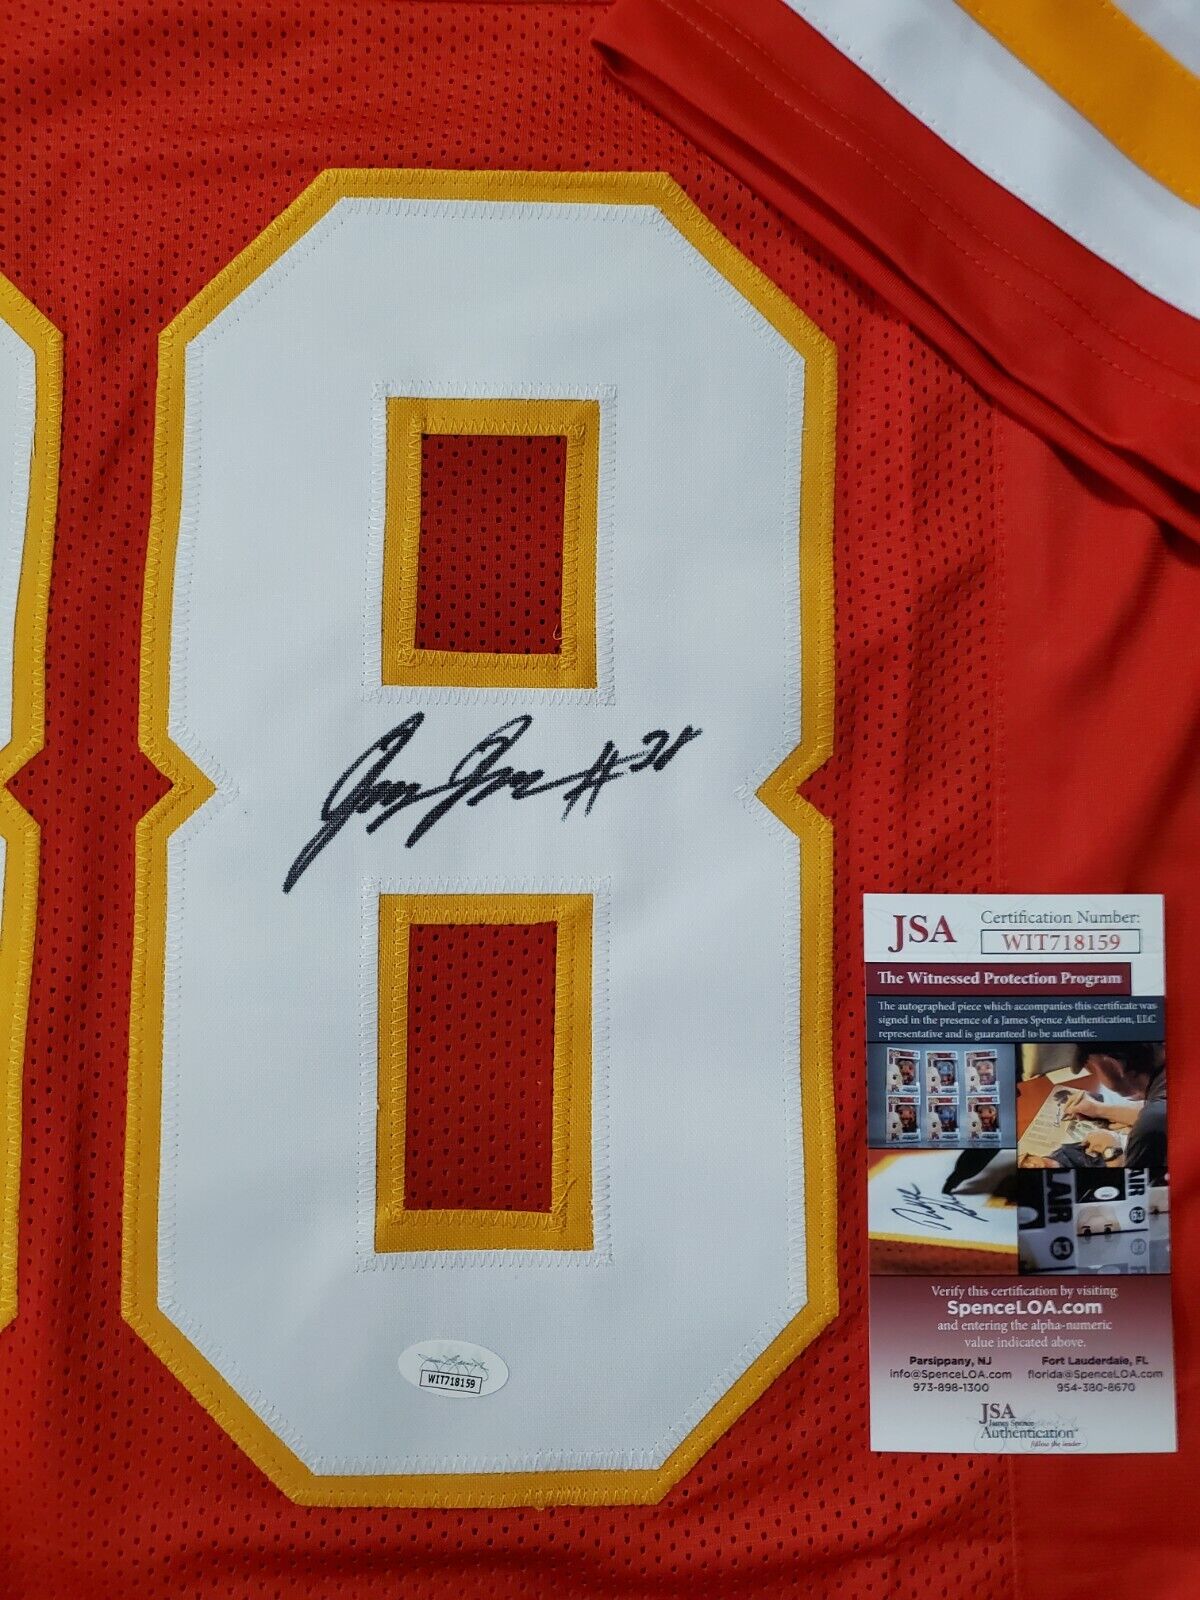 MVP Authentics Kansas City Chiefs L'jarius Sneed Autographed Signed Jersey Jsa Coa 135 sports jersey framing , jersey framing